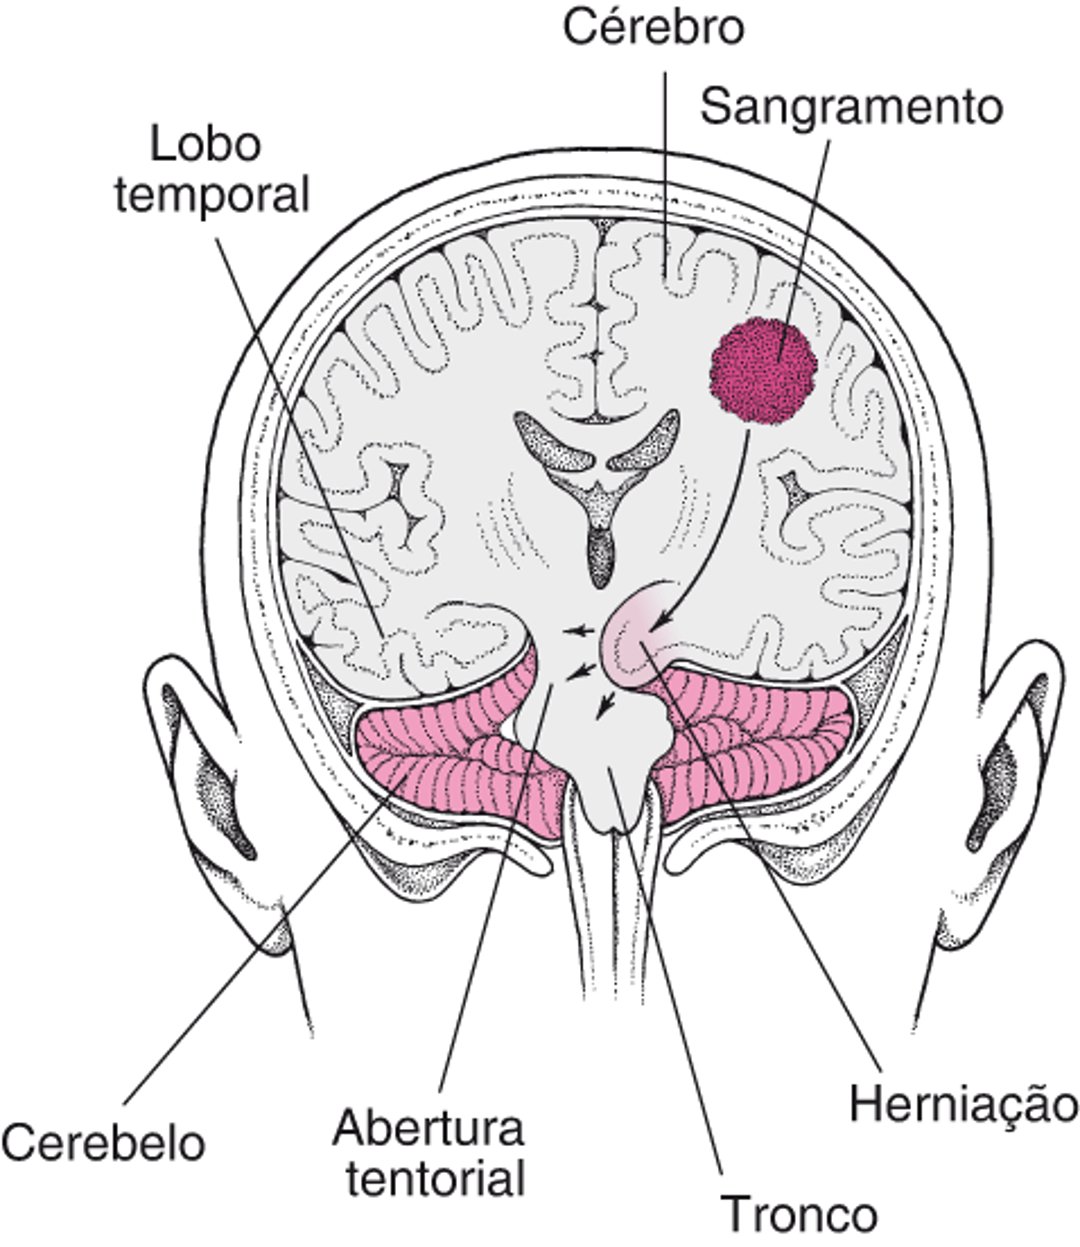 Herniação: O cérebro sob pressão